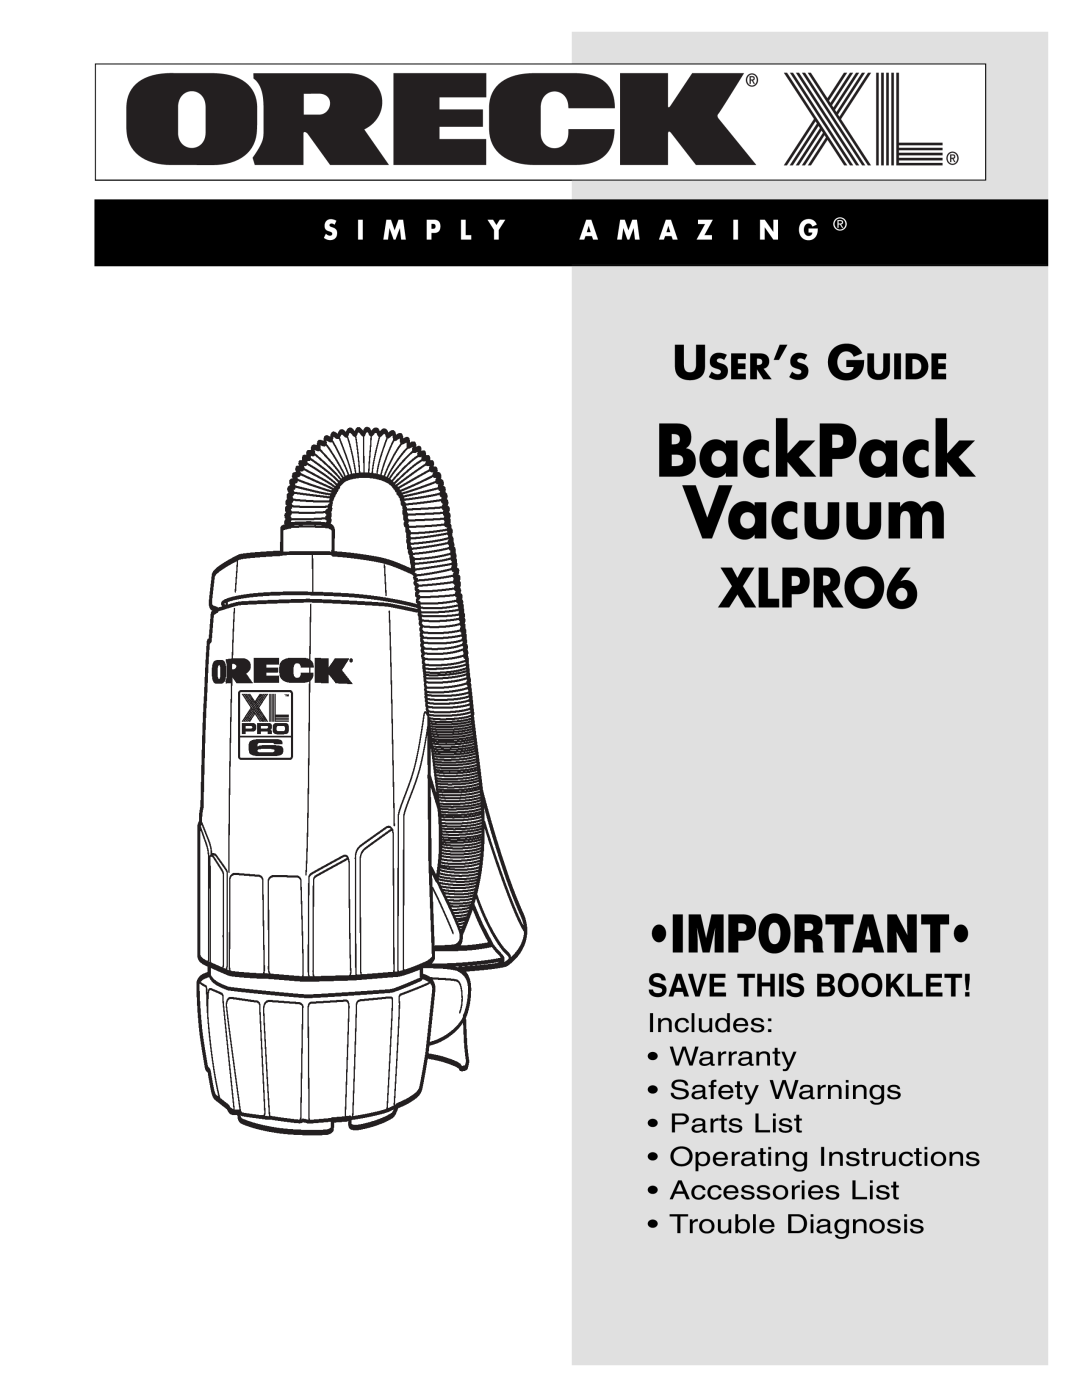 Oreck warranty Save This Booklet, BackPack Vacuum, XLPRO6 IMPORTANT, User’S Guide, S I M P L Y A M A Z I N G 